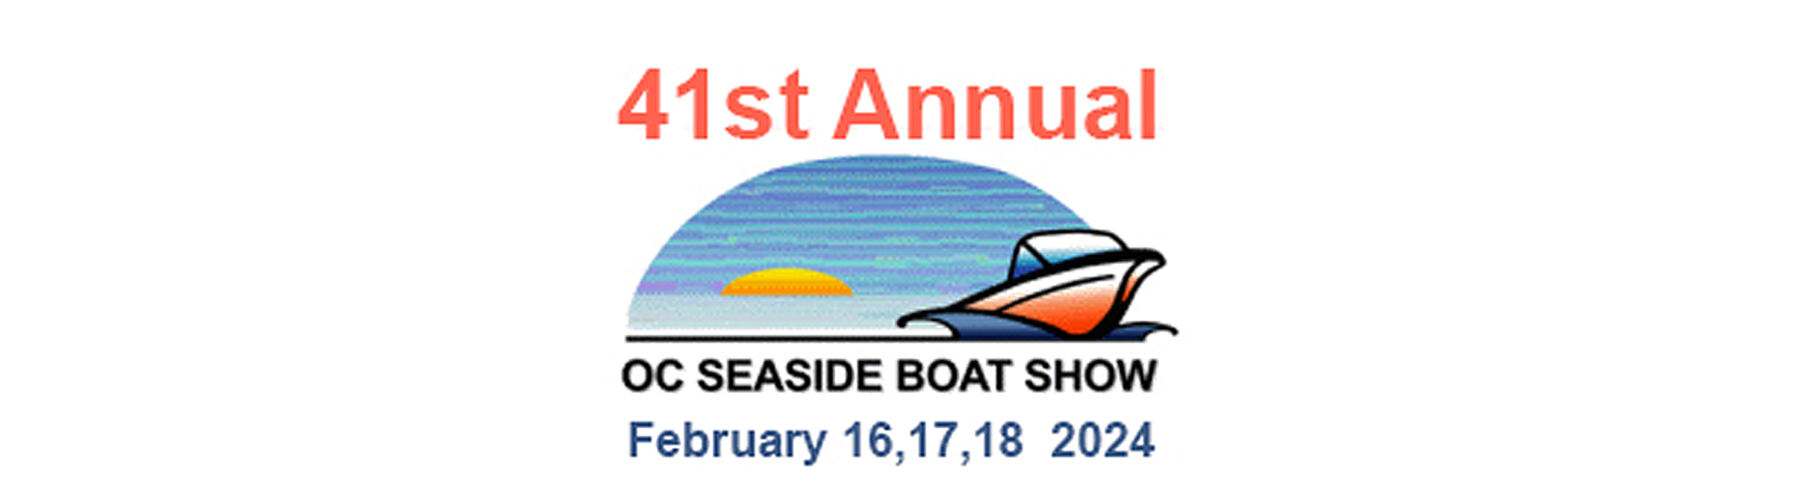 Ocean City Seaside Boat Show Banner